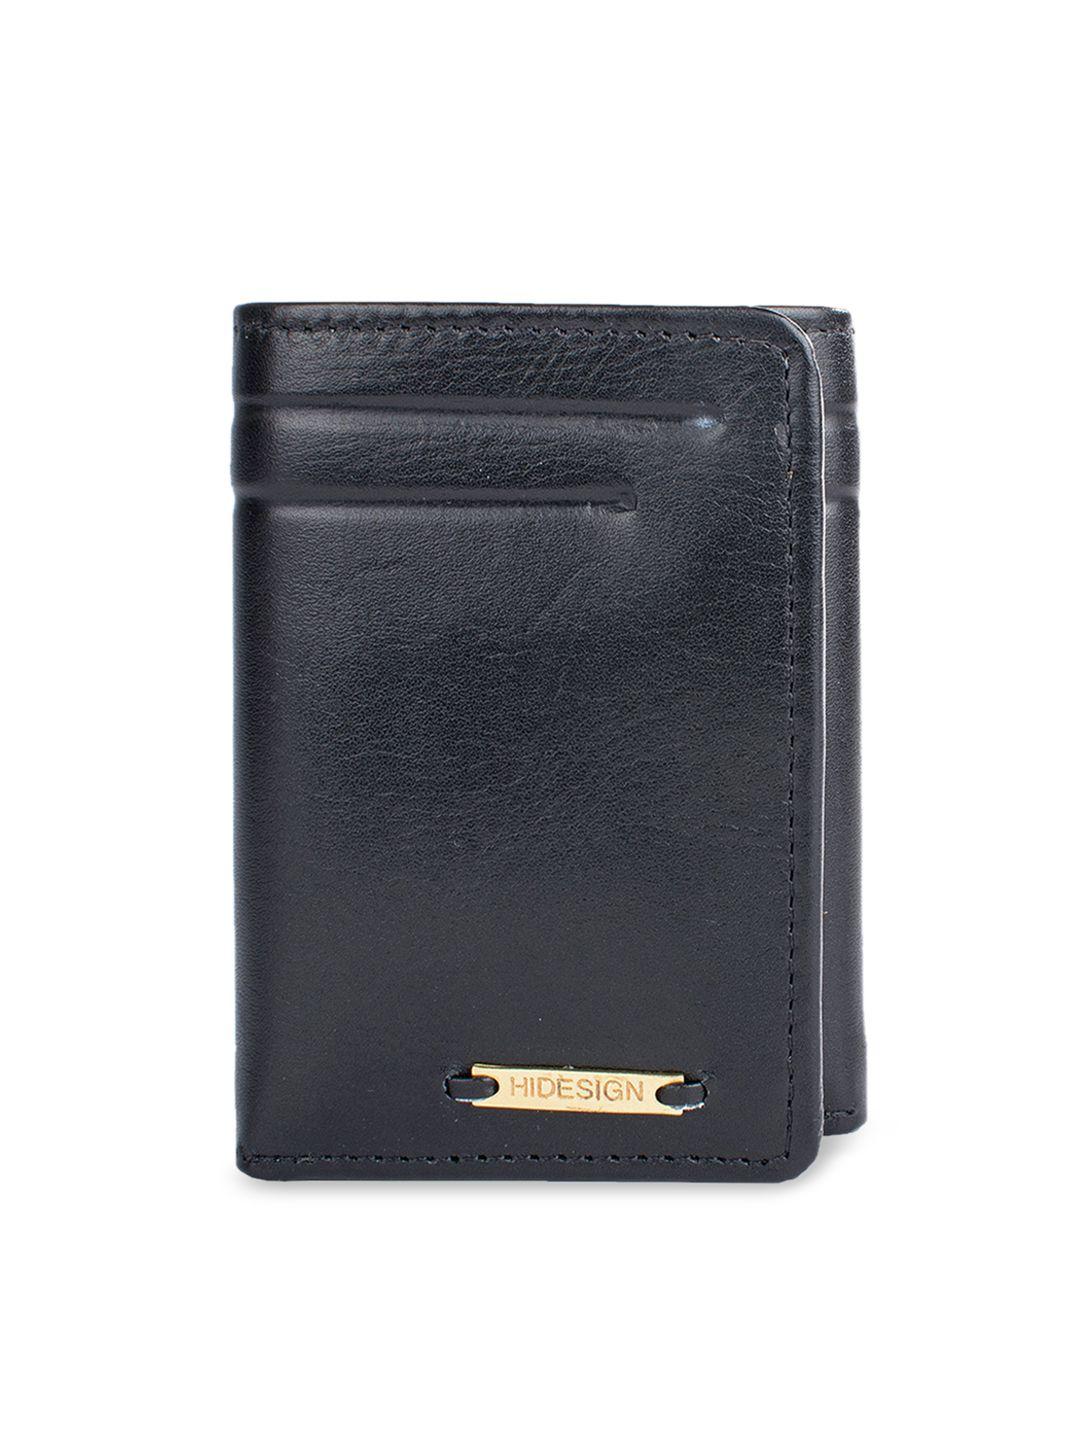 hidesign men black textured three fold leather wallet